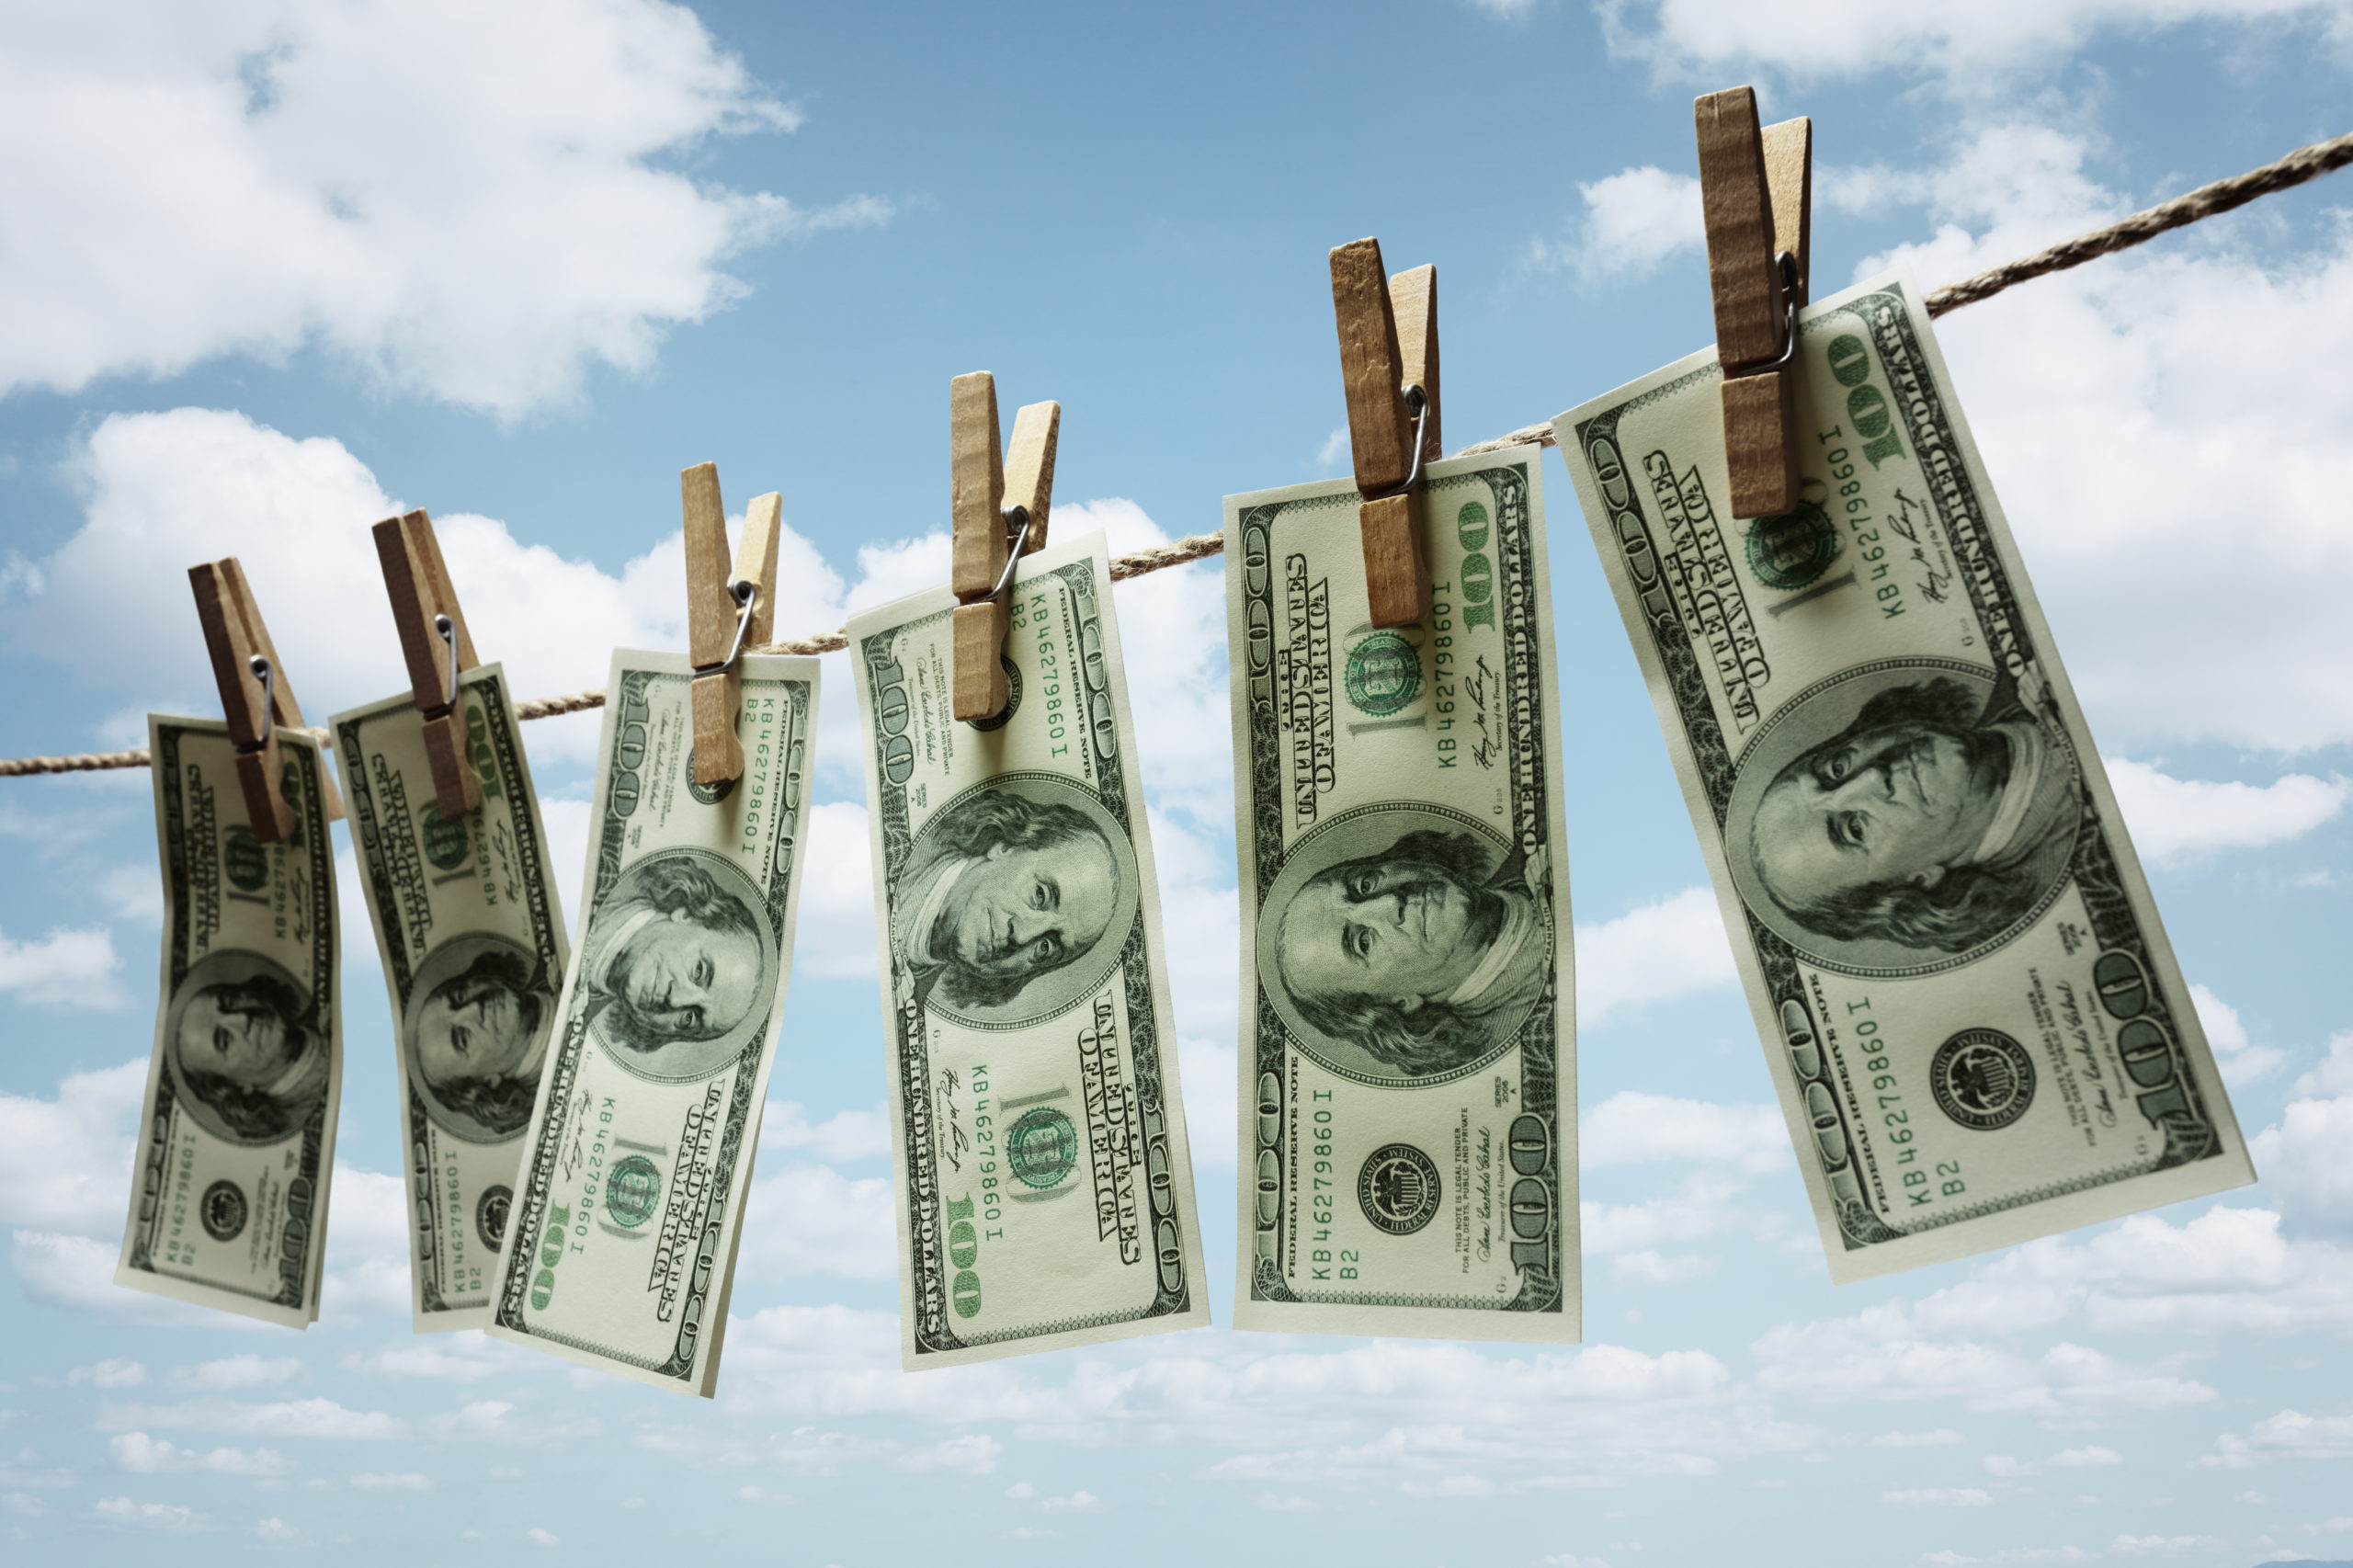 American Gaming Association Updates: Anti-Money Laundering Best Practices